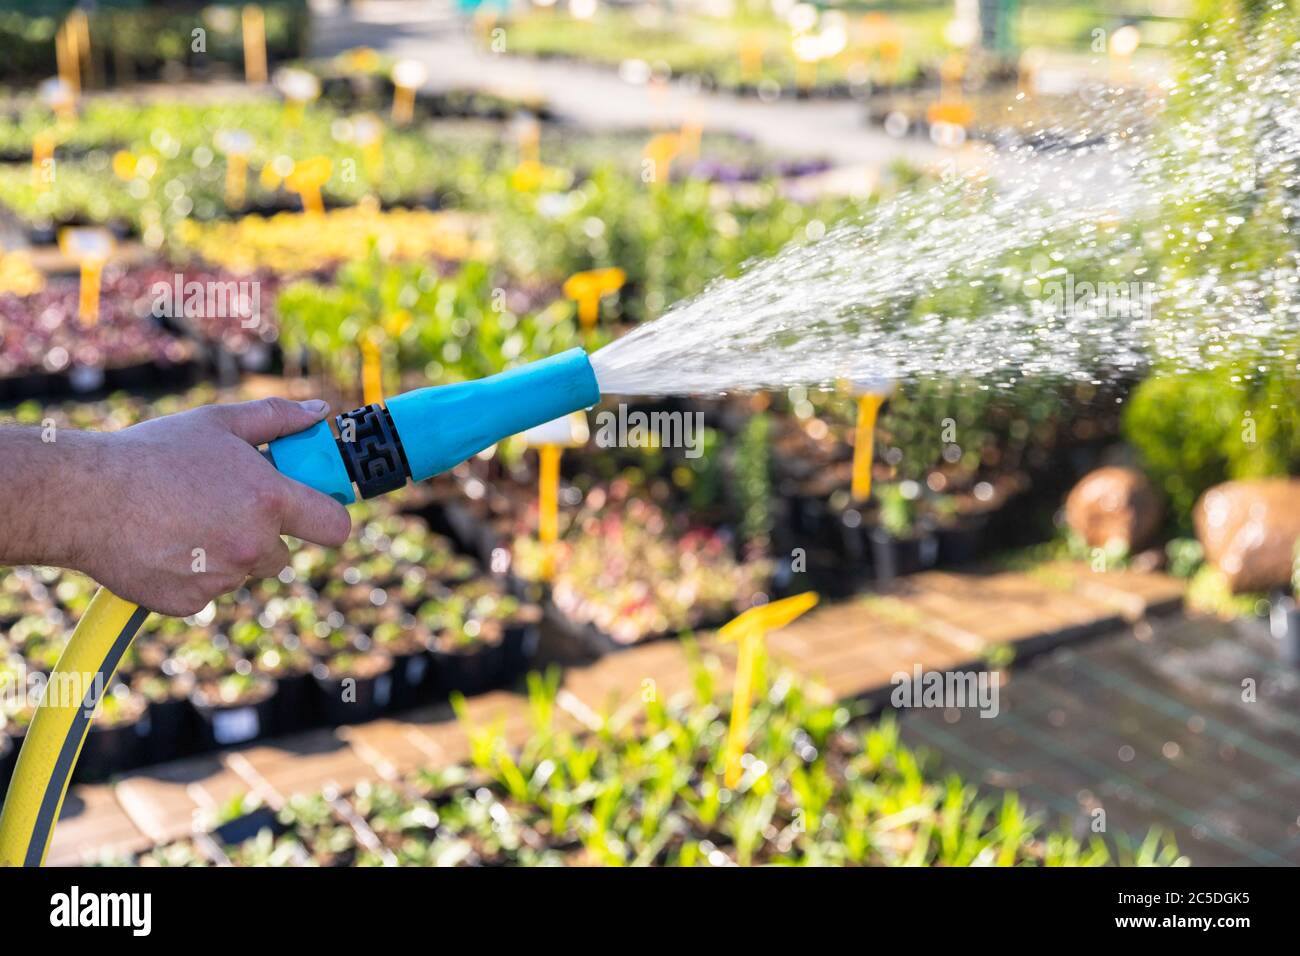 Gardener hand with garden hose watering plants, close up, sun light. Gardening concept Stock Photo